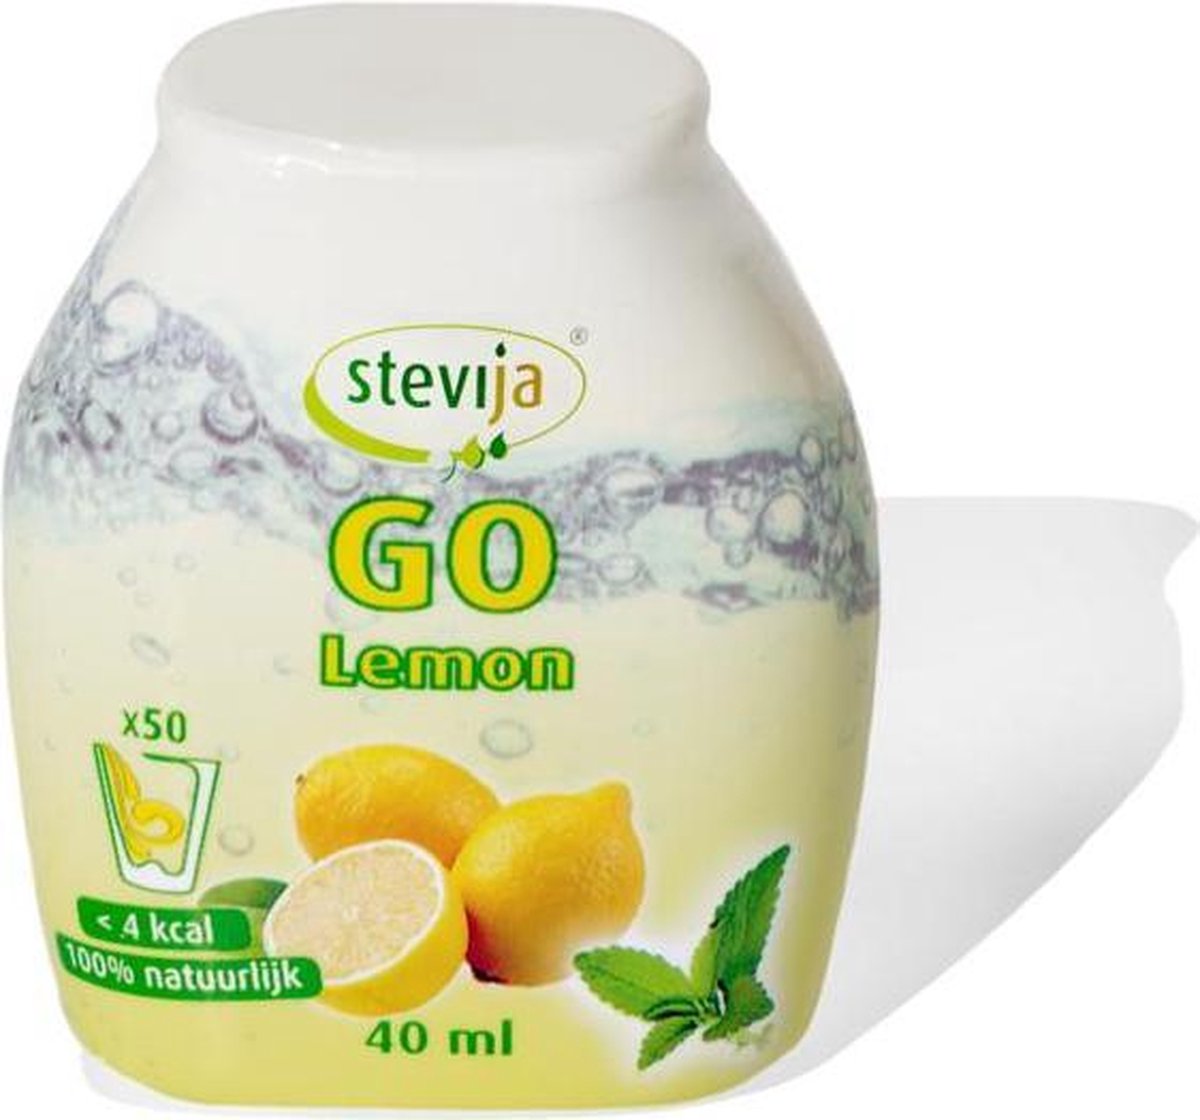 Stevija Stevia Lemonade Syrup Go Lemon, 40 Ml, 1 Units